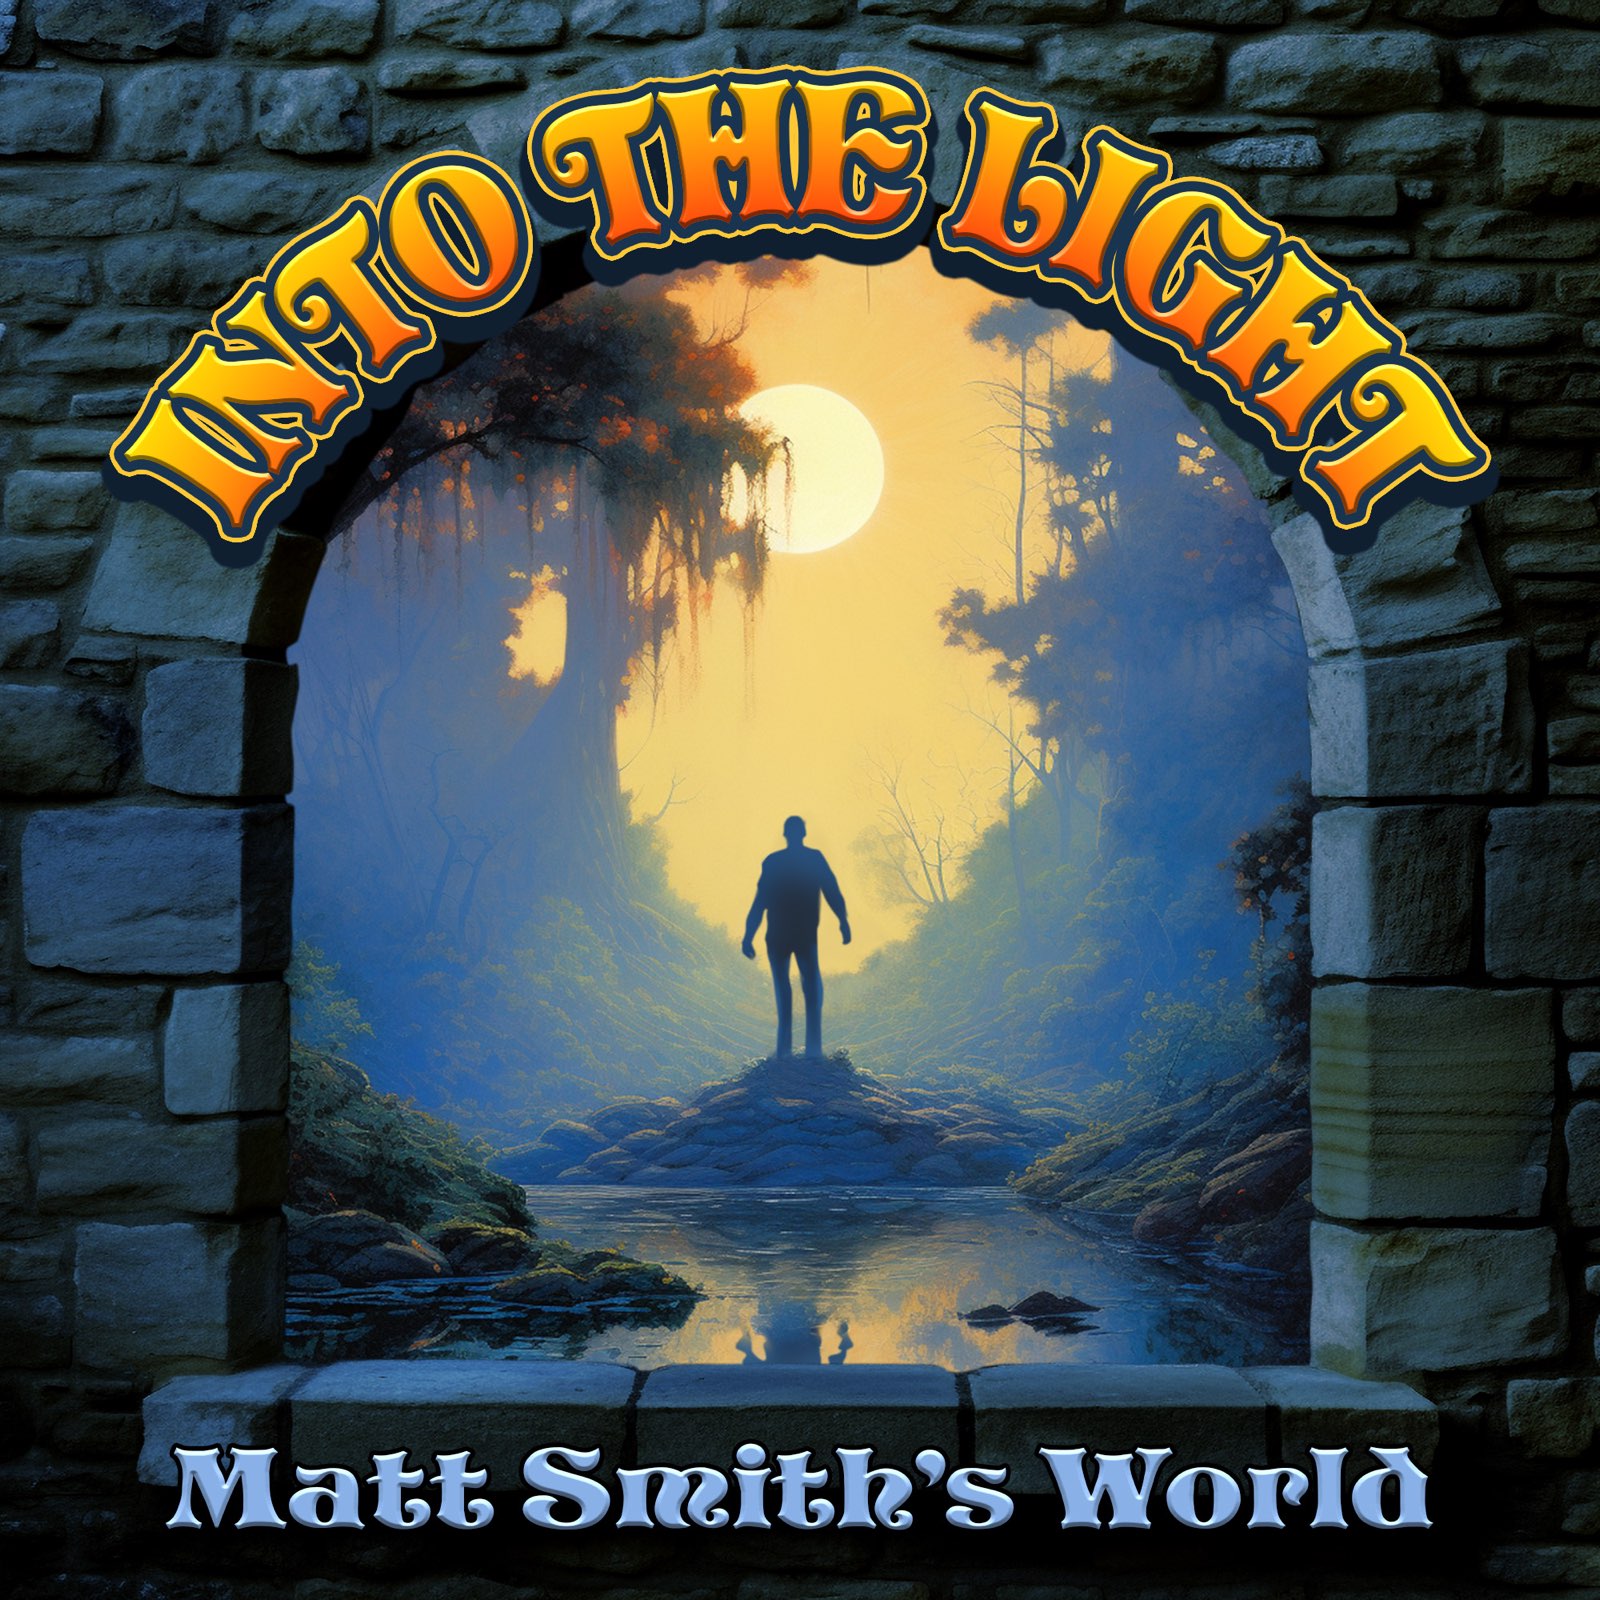 Matt Smith’s World Debuts "Into The Light"